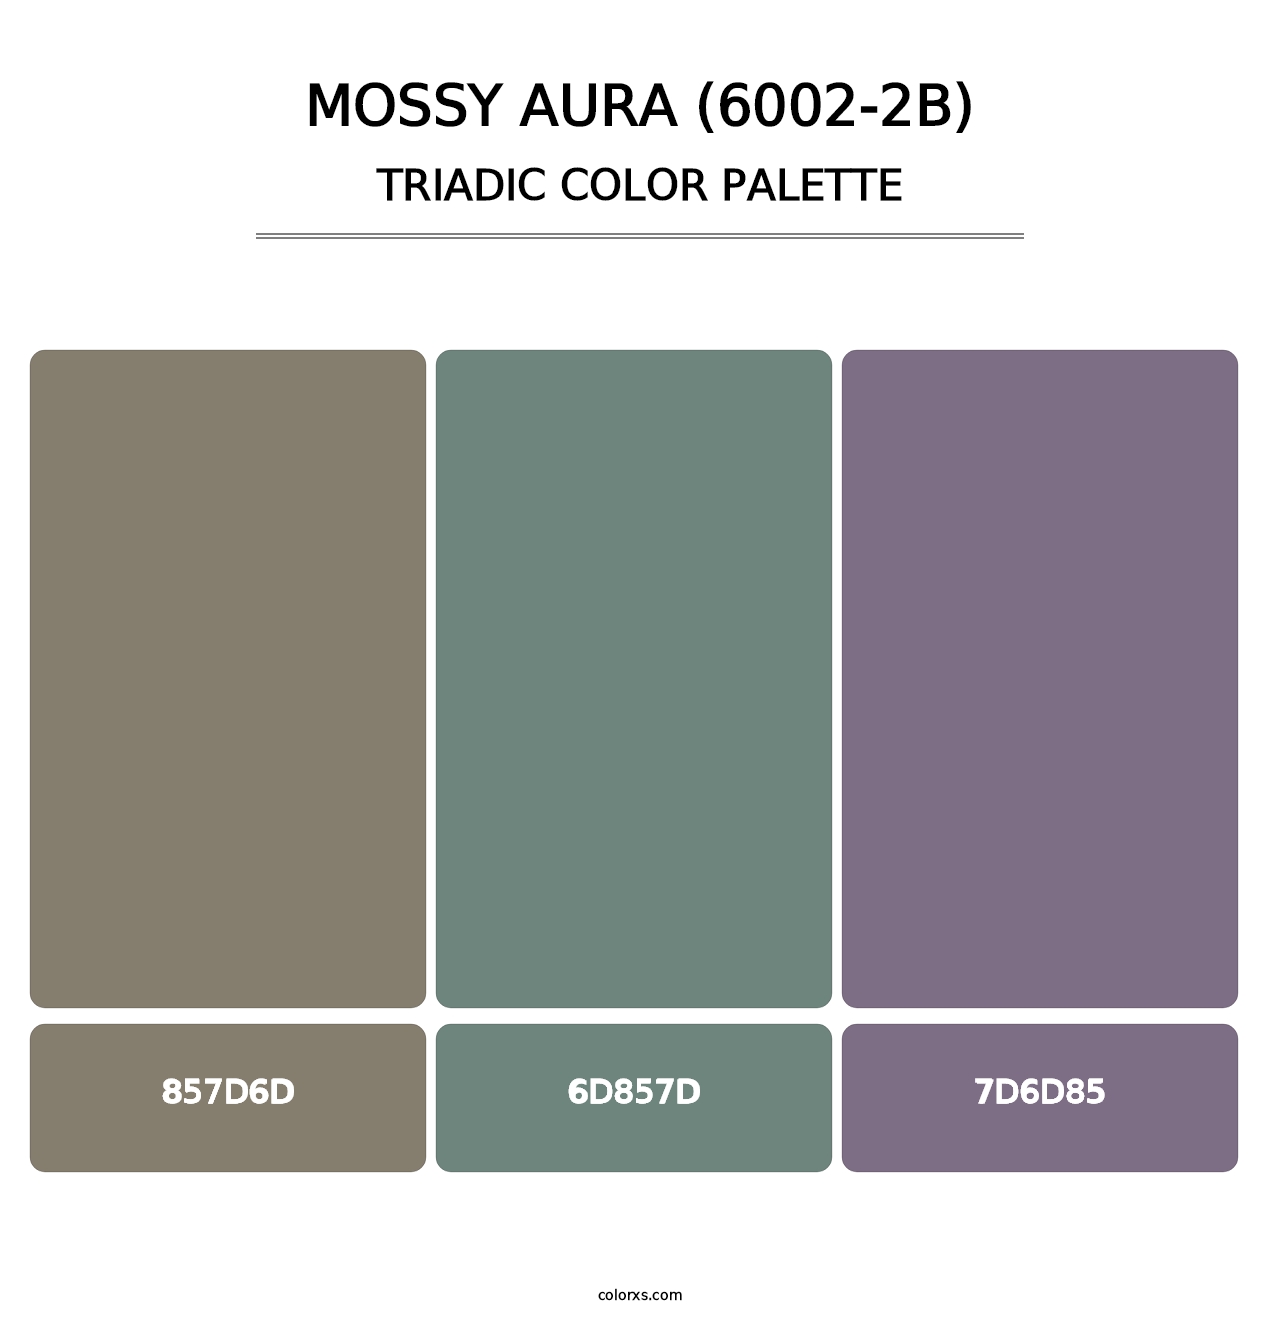 Mossy Aura (6002-2B) - Triadic Color Palette